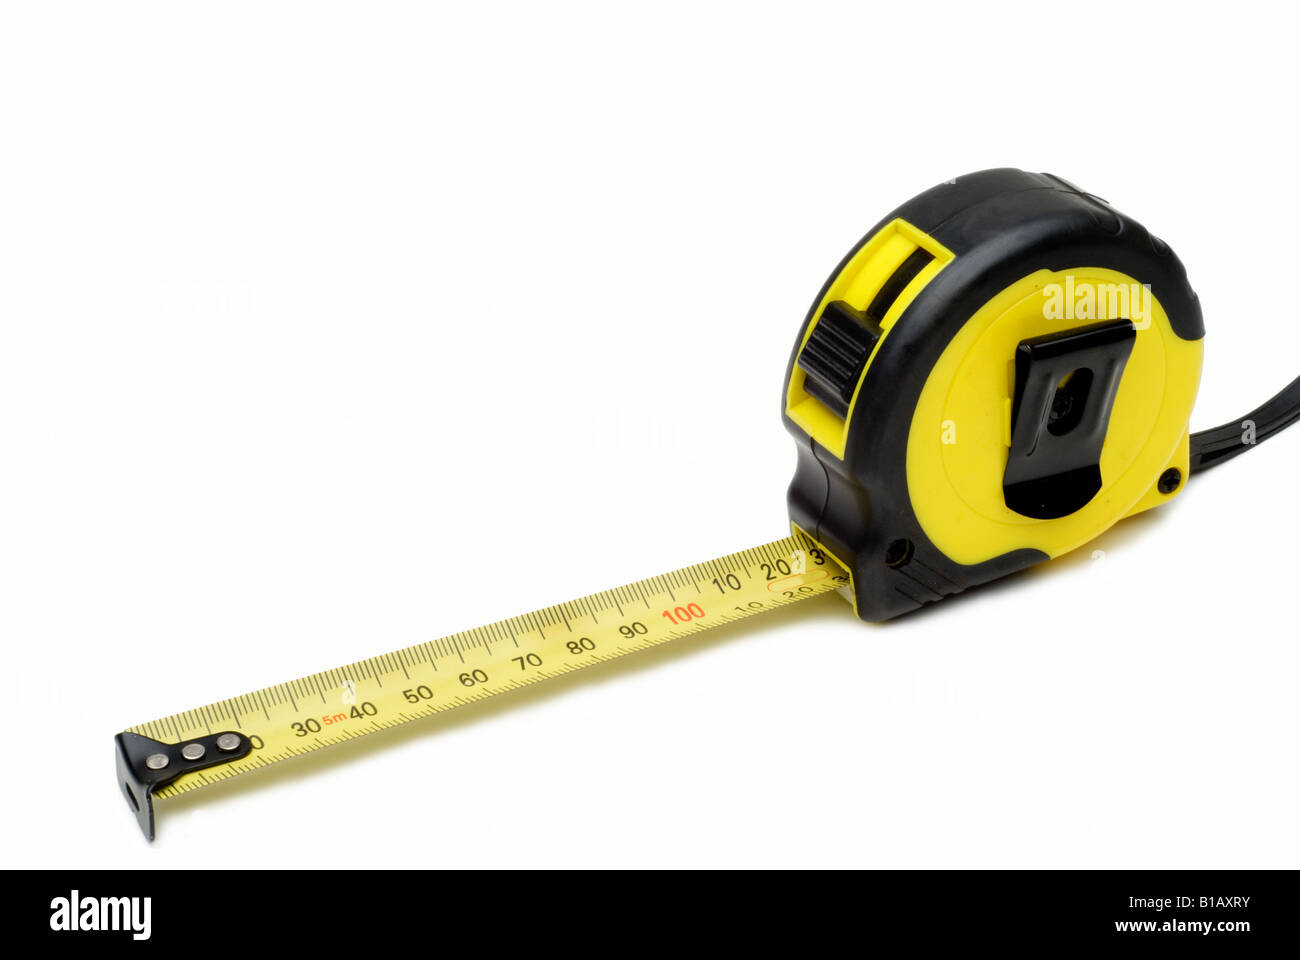 Workman's tape measure Stock Photo